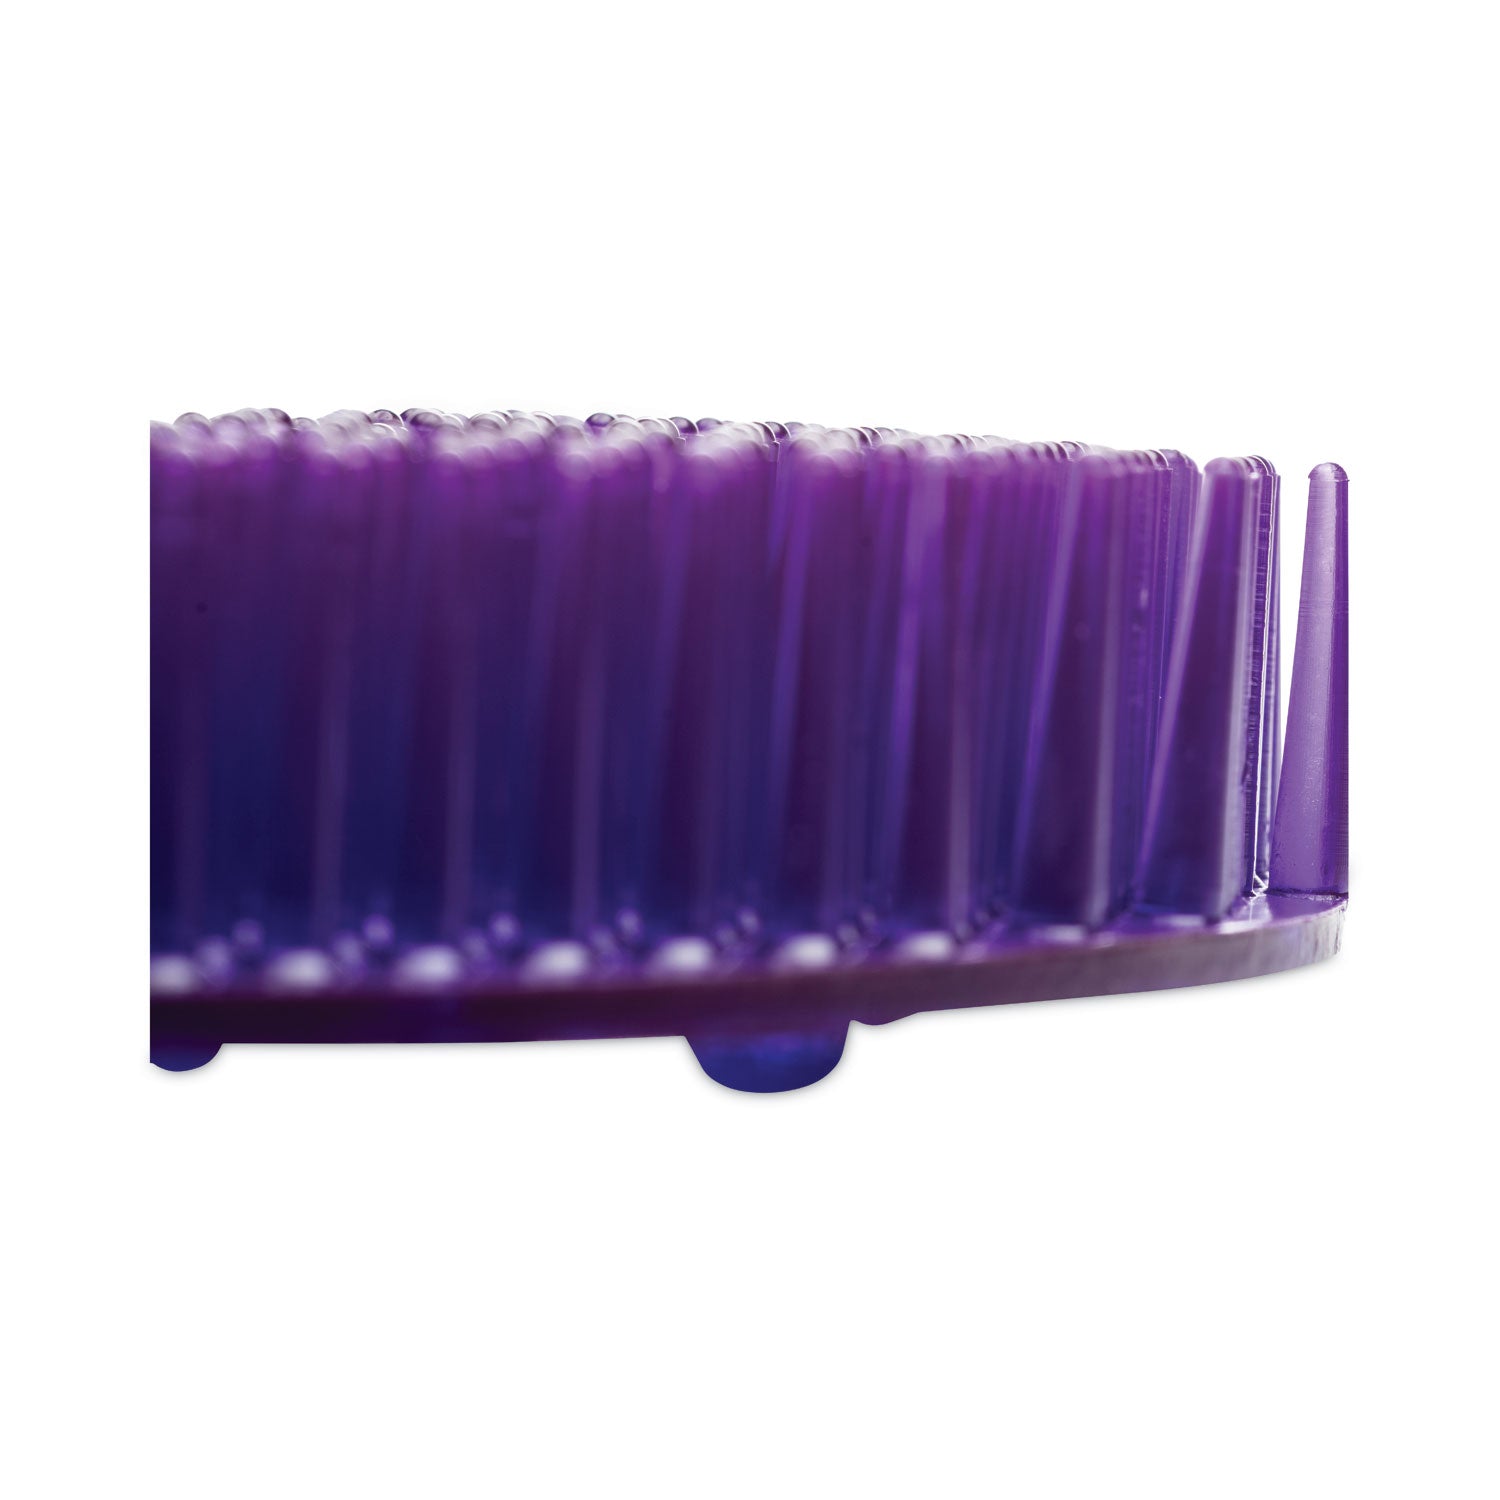 ekcoscreen-urinal-screens-berry-scent-purple-12-carton_dvoeks1p12 - 5